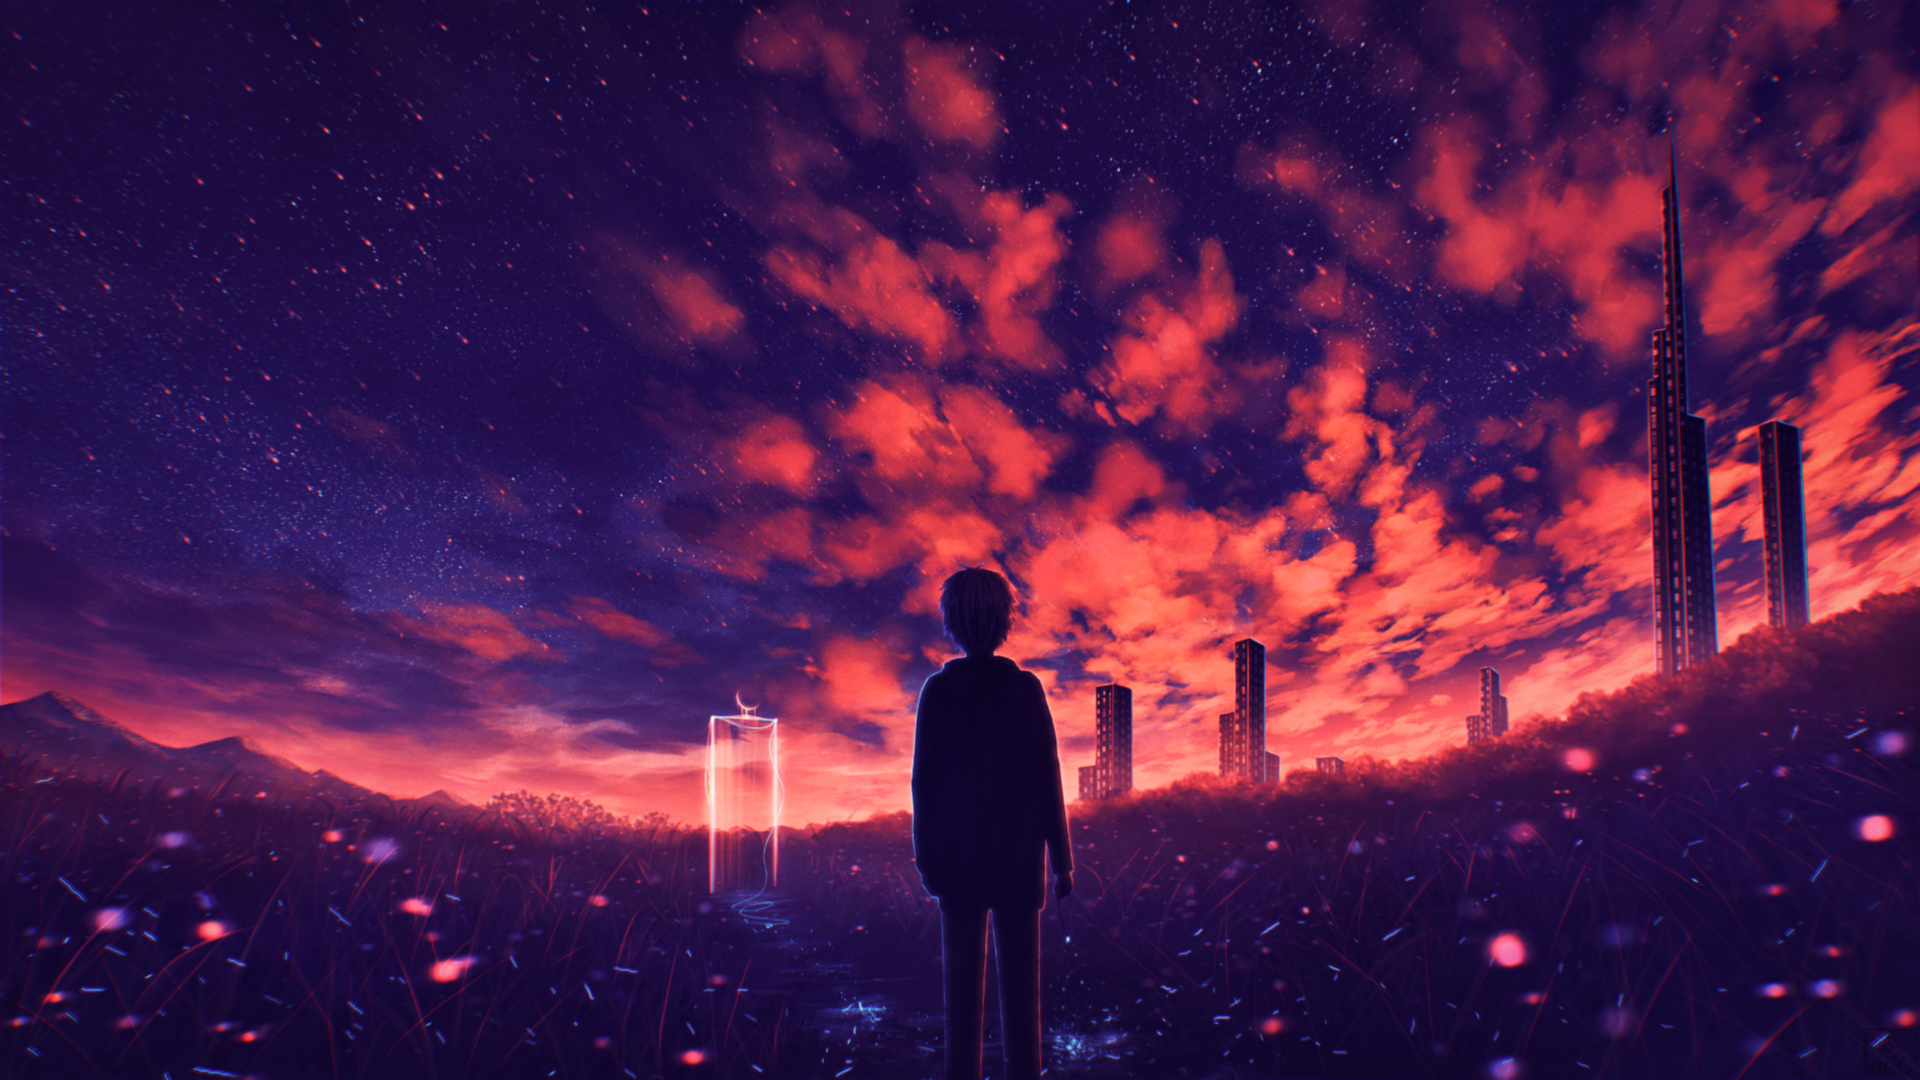 Golden Horizon: HD Anime Sunset by Elizabeth Miloecute